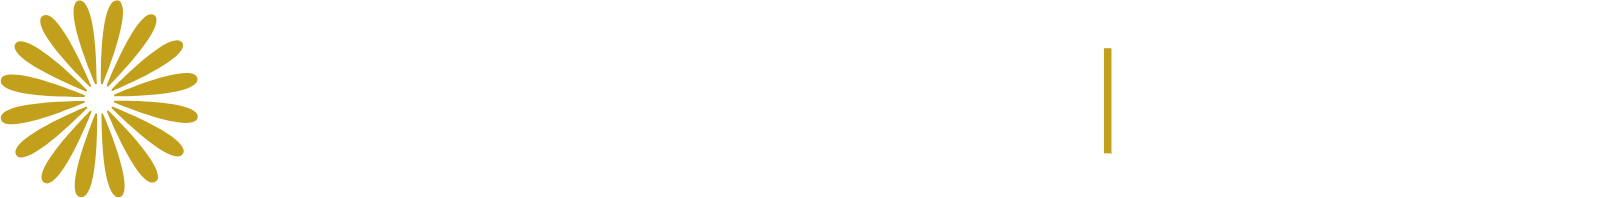 Luther Burbank logo grand pour les fonds sombres (PNG transparent)